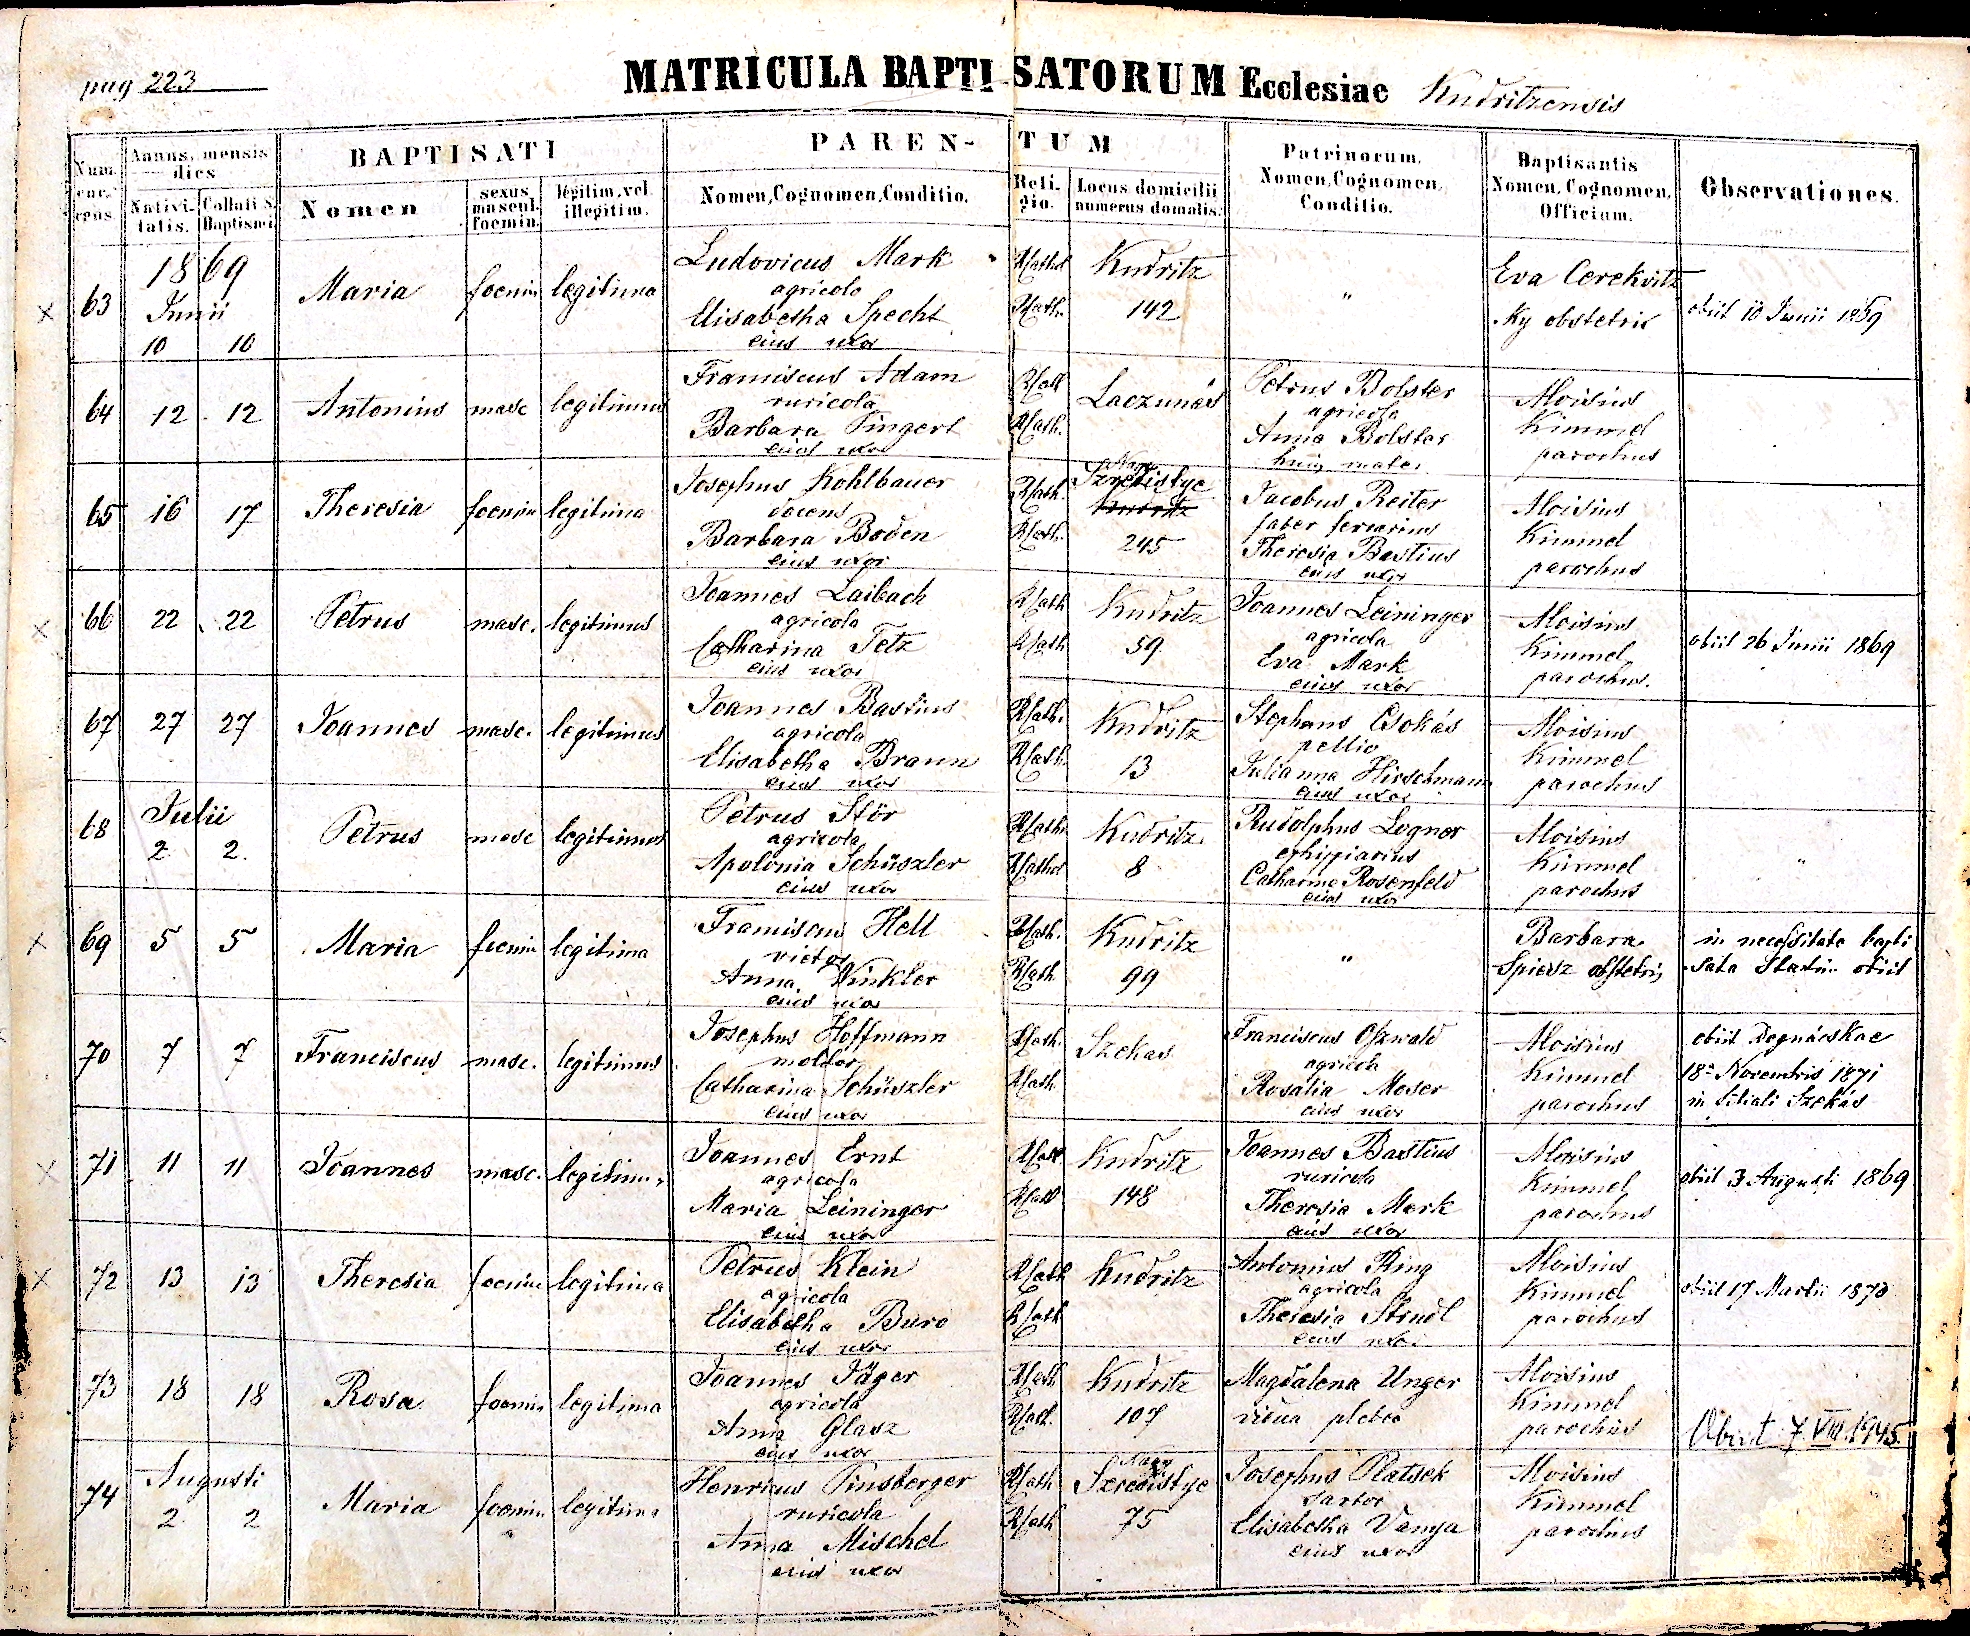 images/church_records/BIRTHS/1852-1870B/223